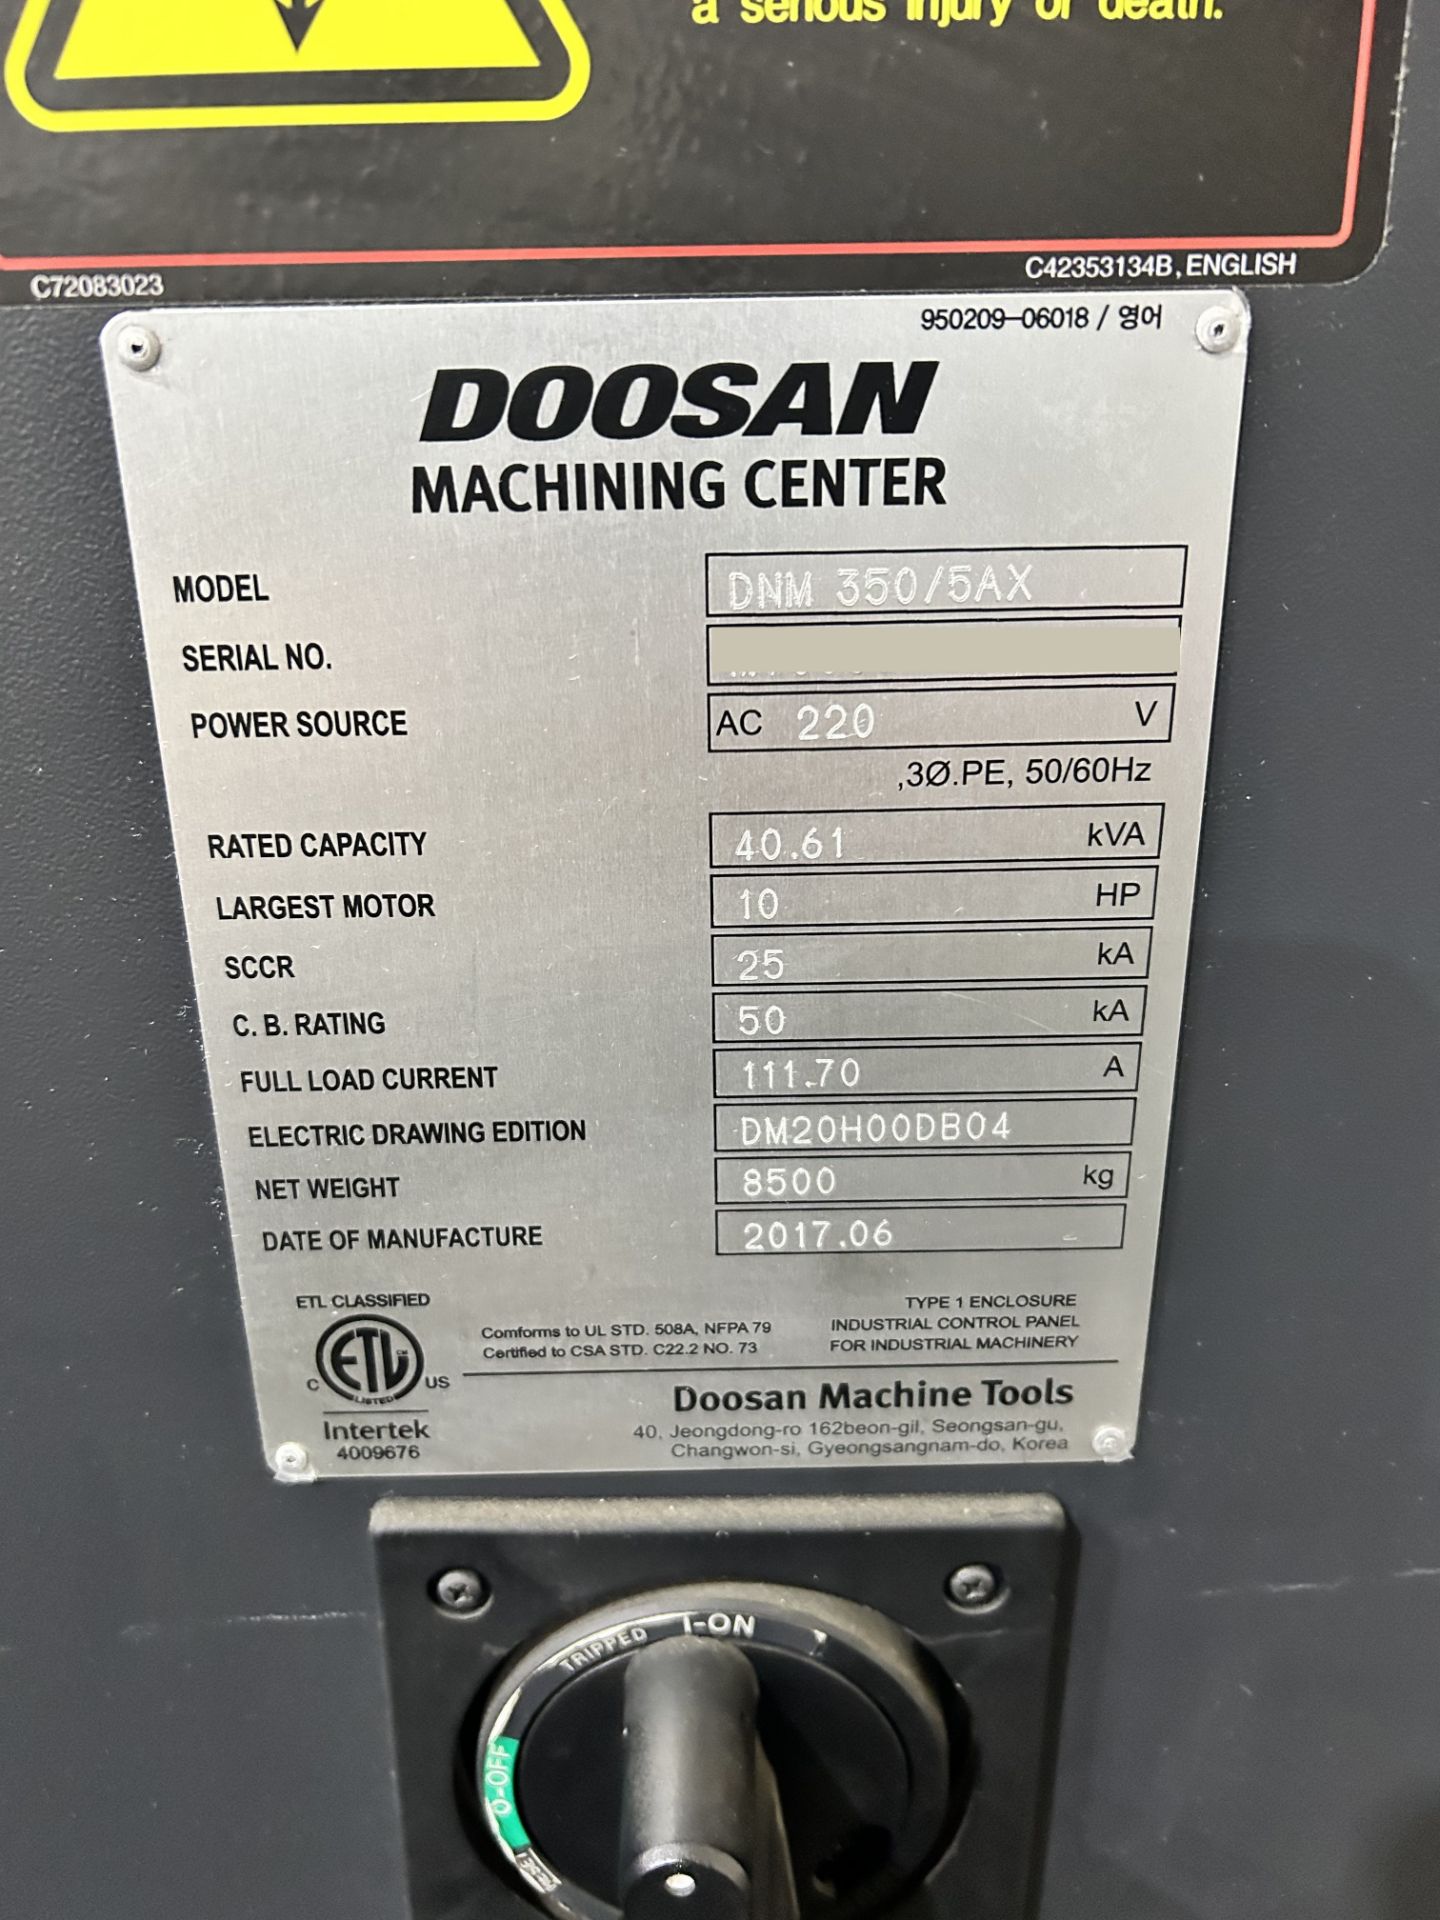 2017 Doosan DNM 350/5AX, CNC Vertical Machining Center - Image 7 of 7